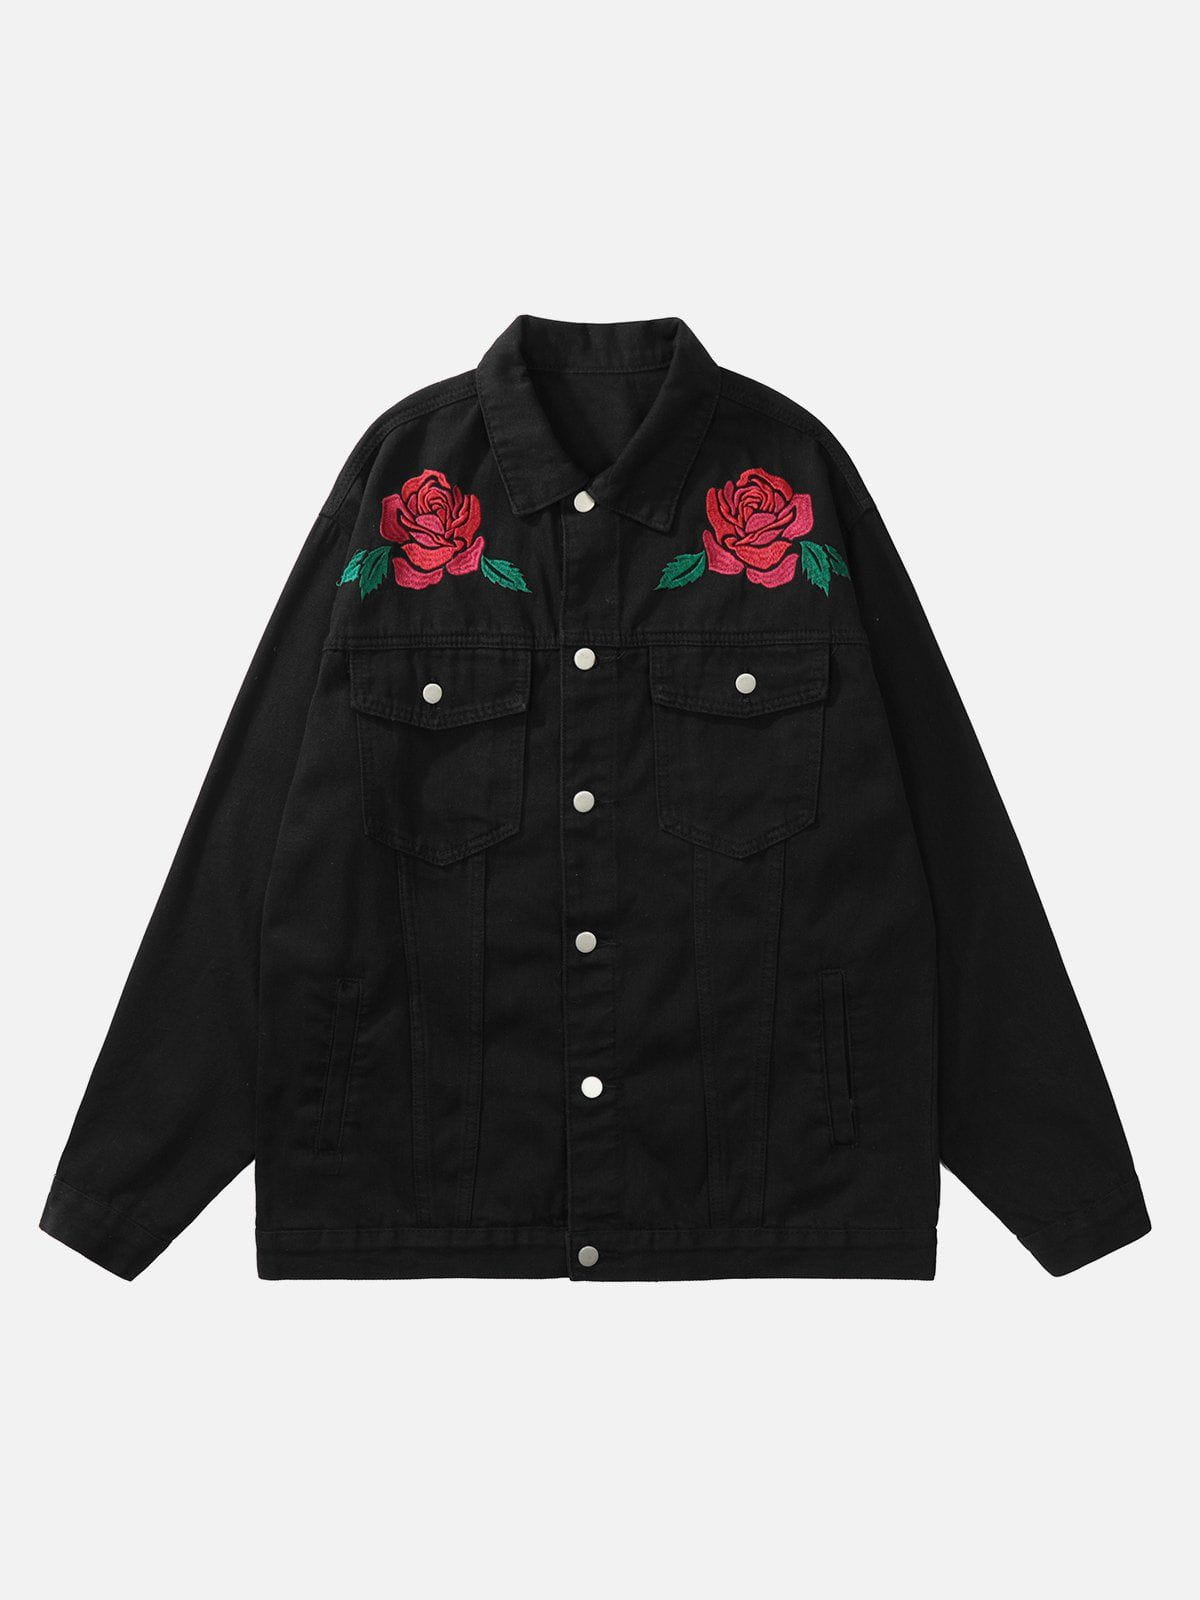 Majesda® - Letter Rose Button Denim Jacket outfit ideas, streetwear fashion - majesda.com